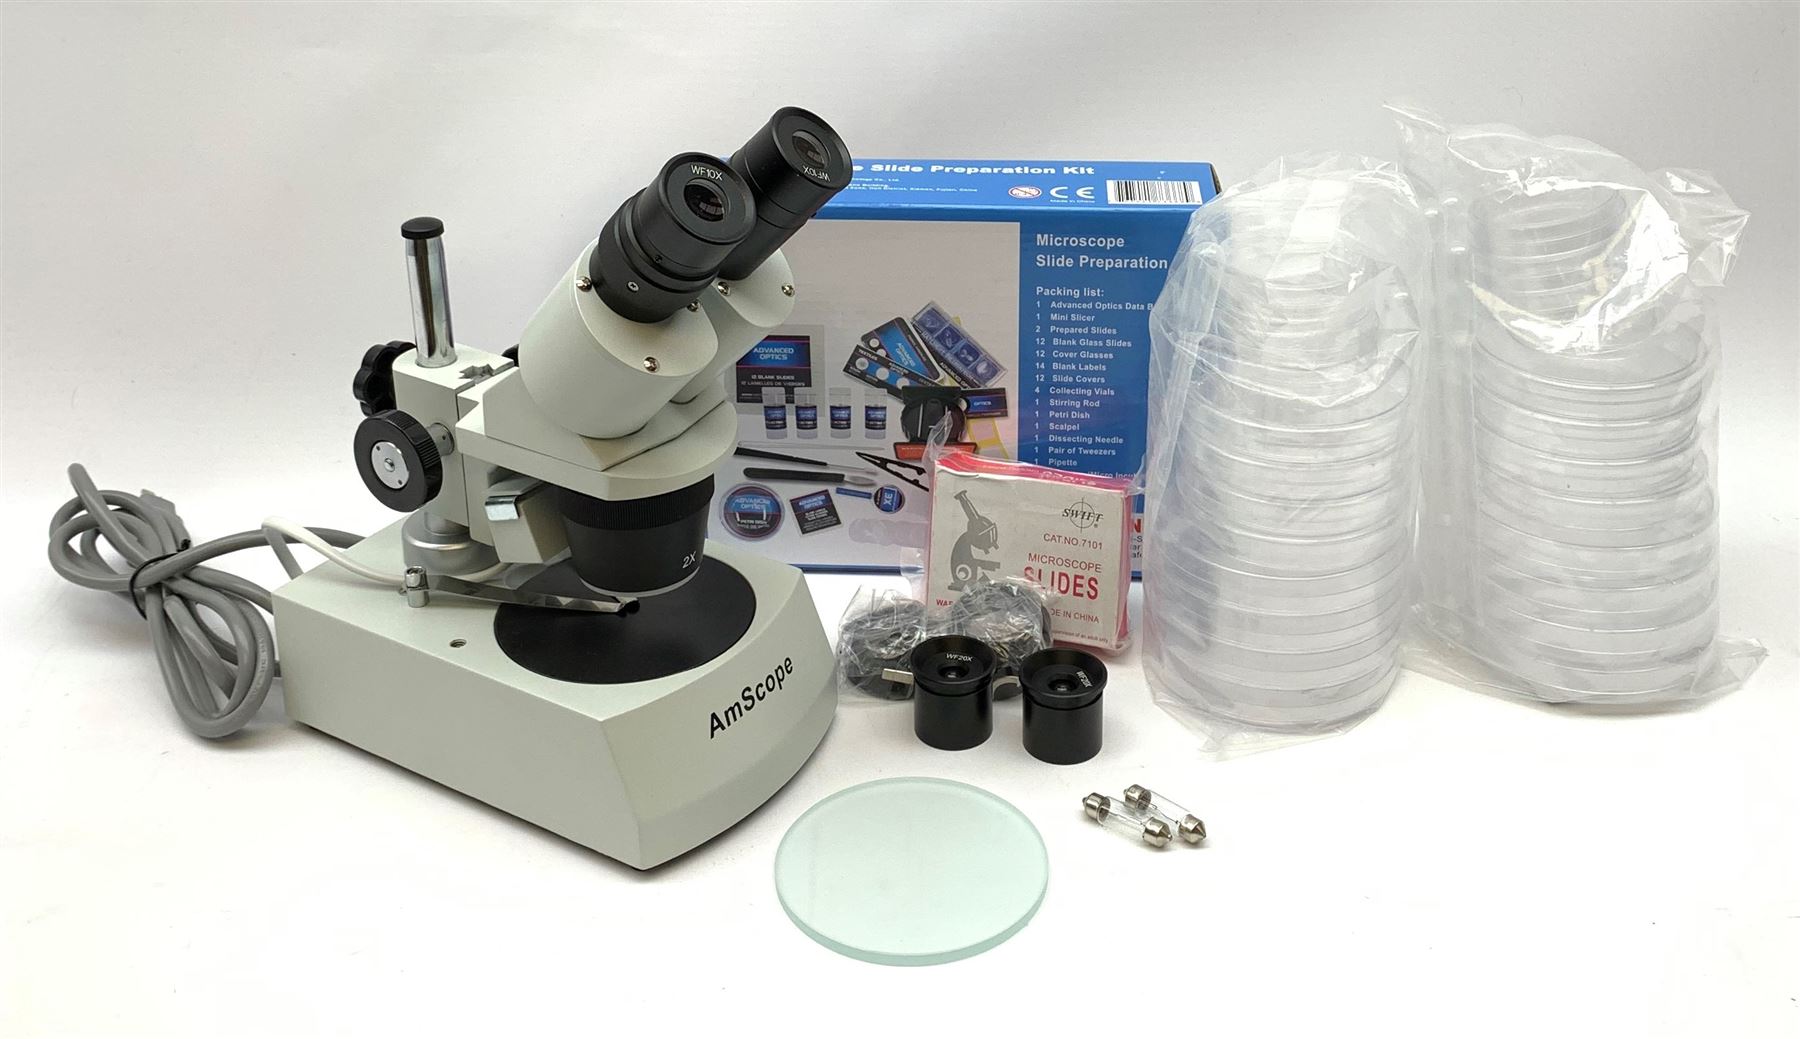 AmScope microscope